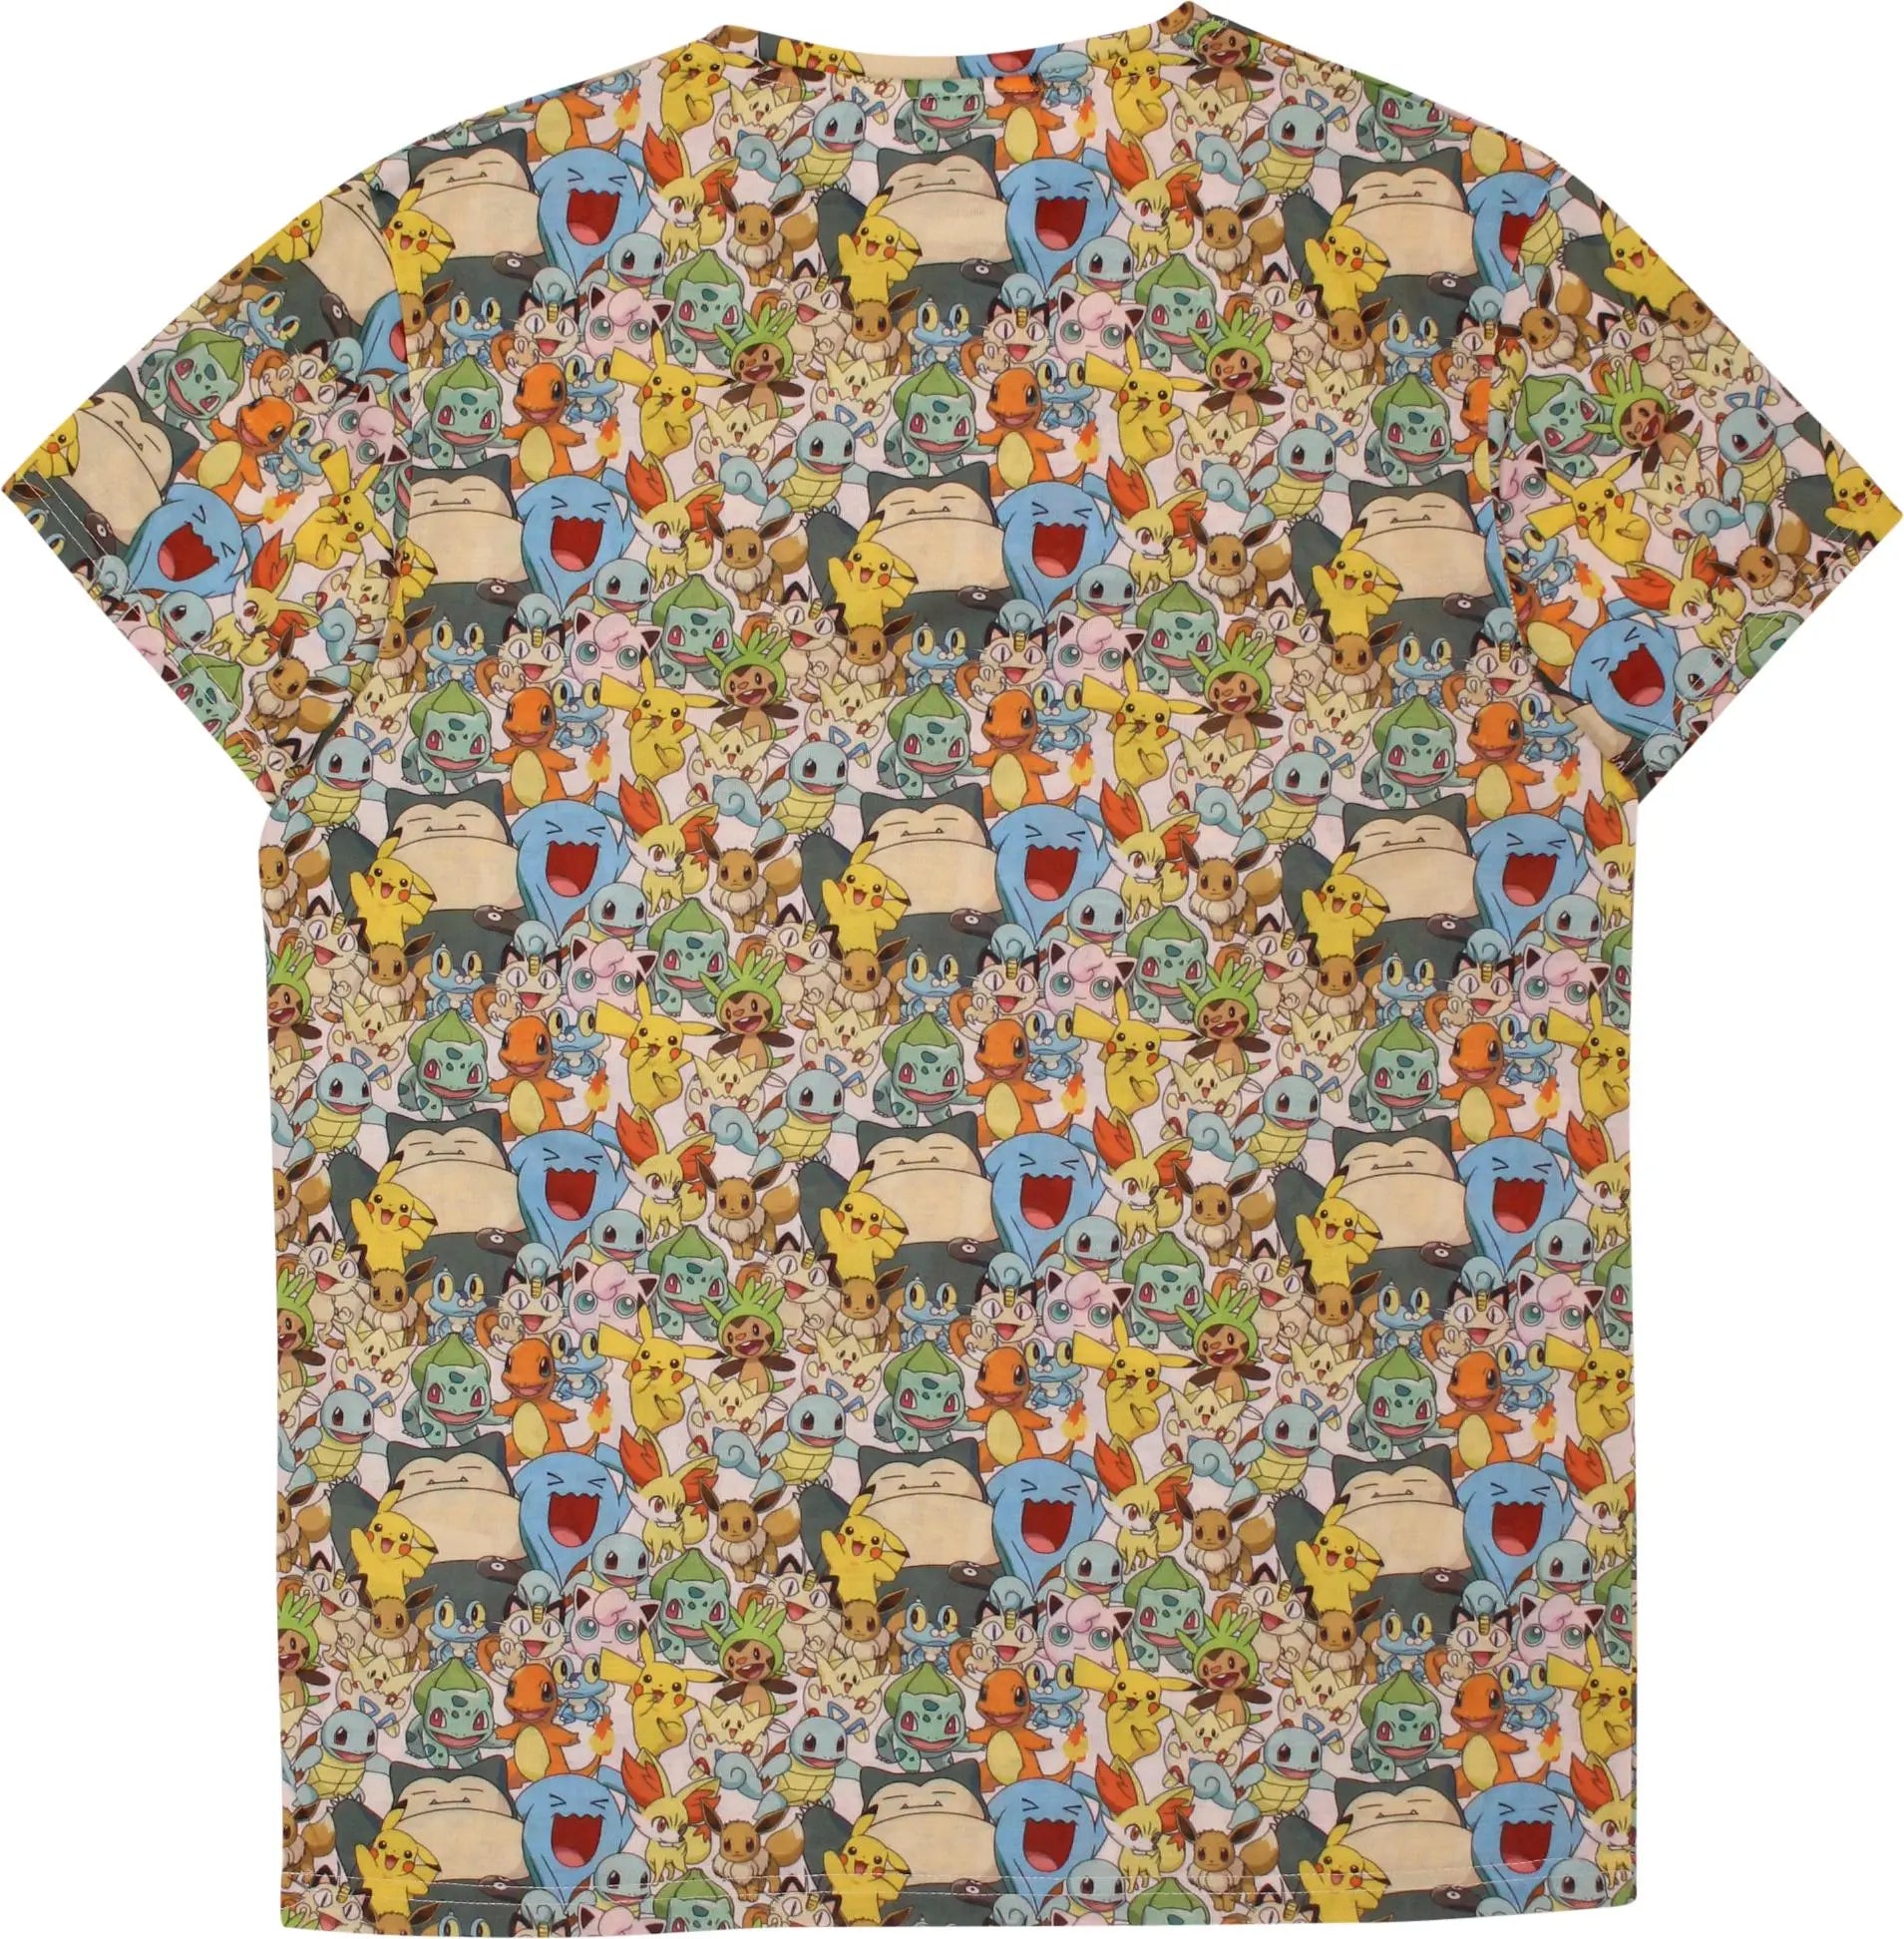 Cedar Wood State - Pokémon Print T-shirt- ThriftTale.com - Vintage and second handclothing